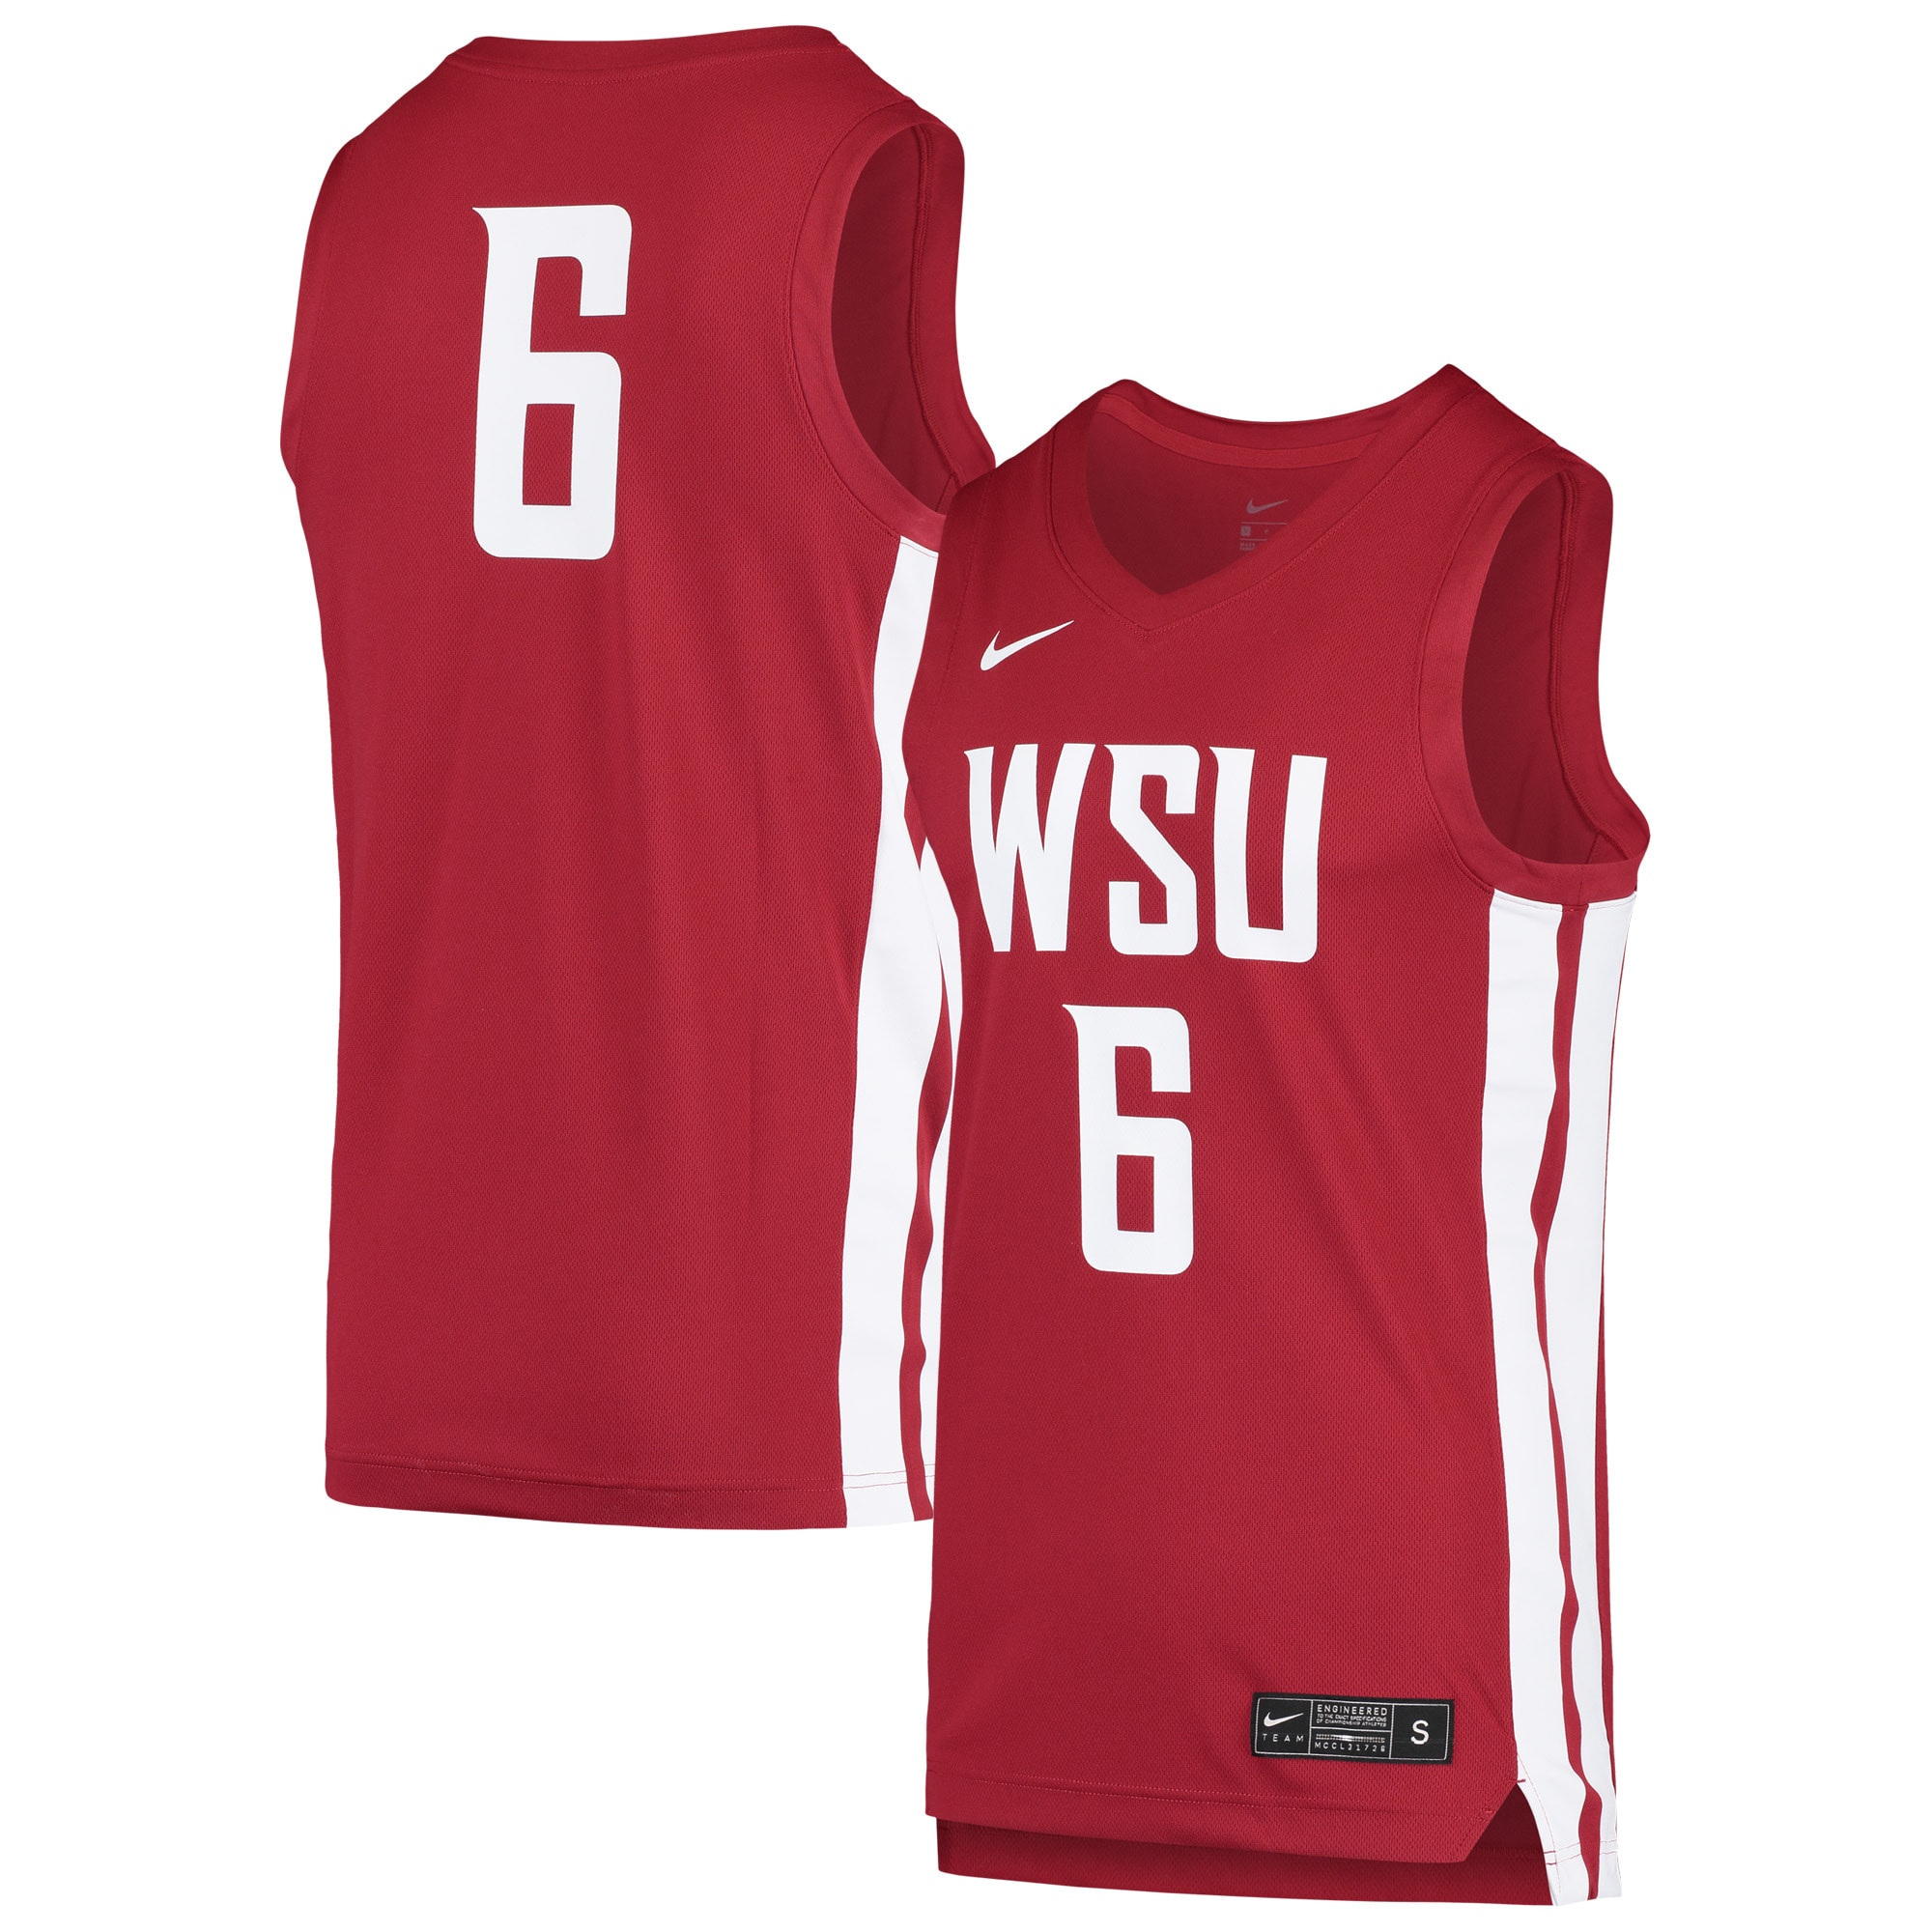 #6 Washington State Cougars Replica Basketball Jersey - Crimson For Youth Women Men